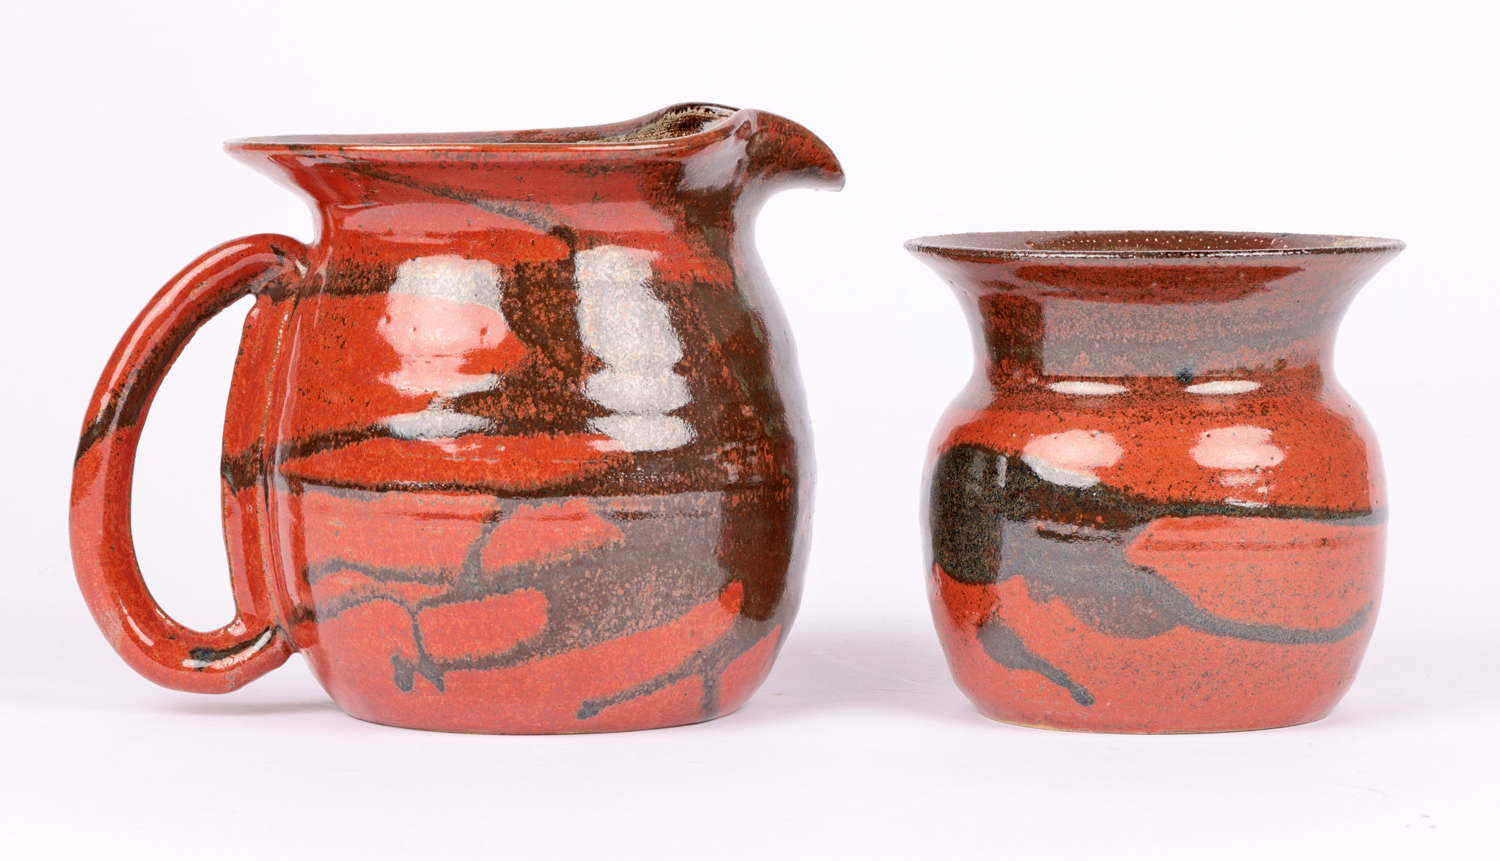 Elizabeth Anderson Harbour Pottery Studio Pottery Jug and Vase